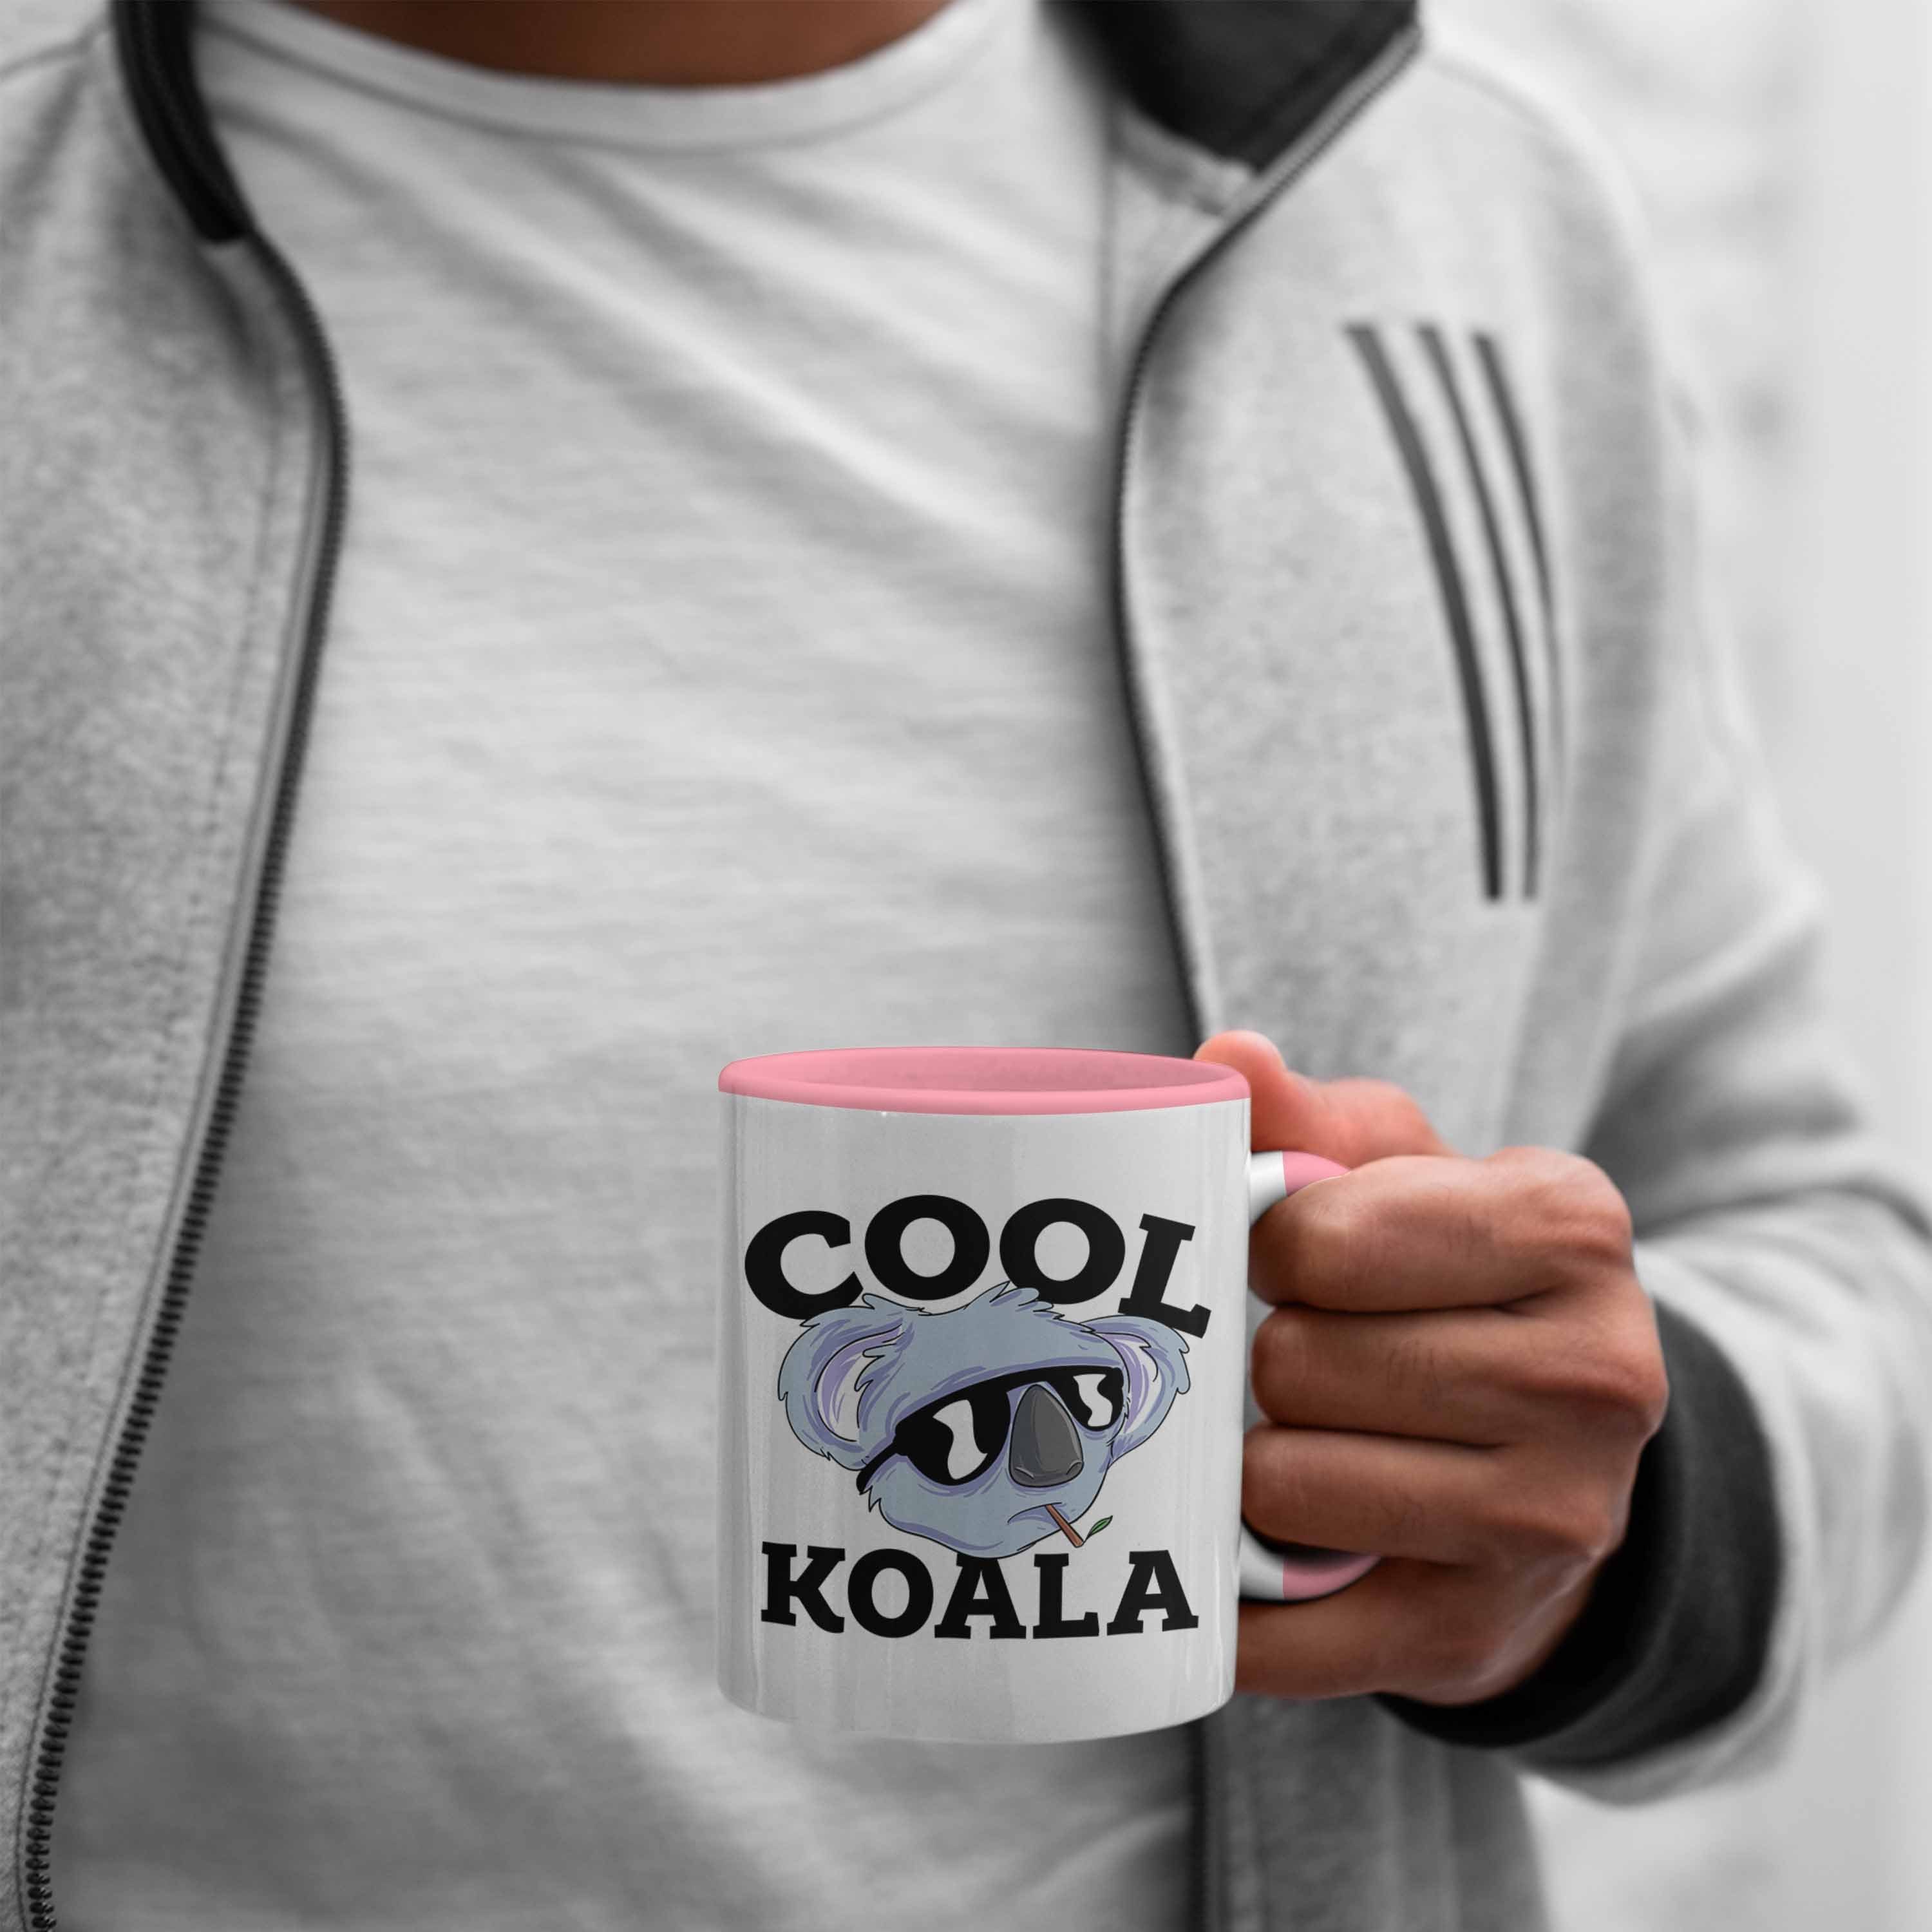 Koala-Liebhaber Rosa Trendation für Koala Geschenkidee Tasse Tasse Tasse Koala-Aufdruck